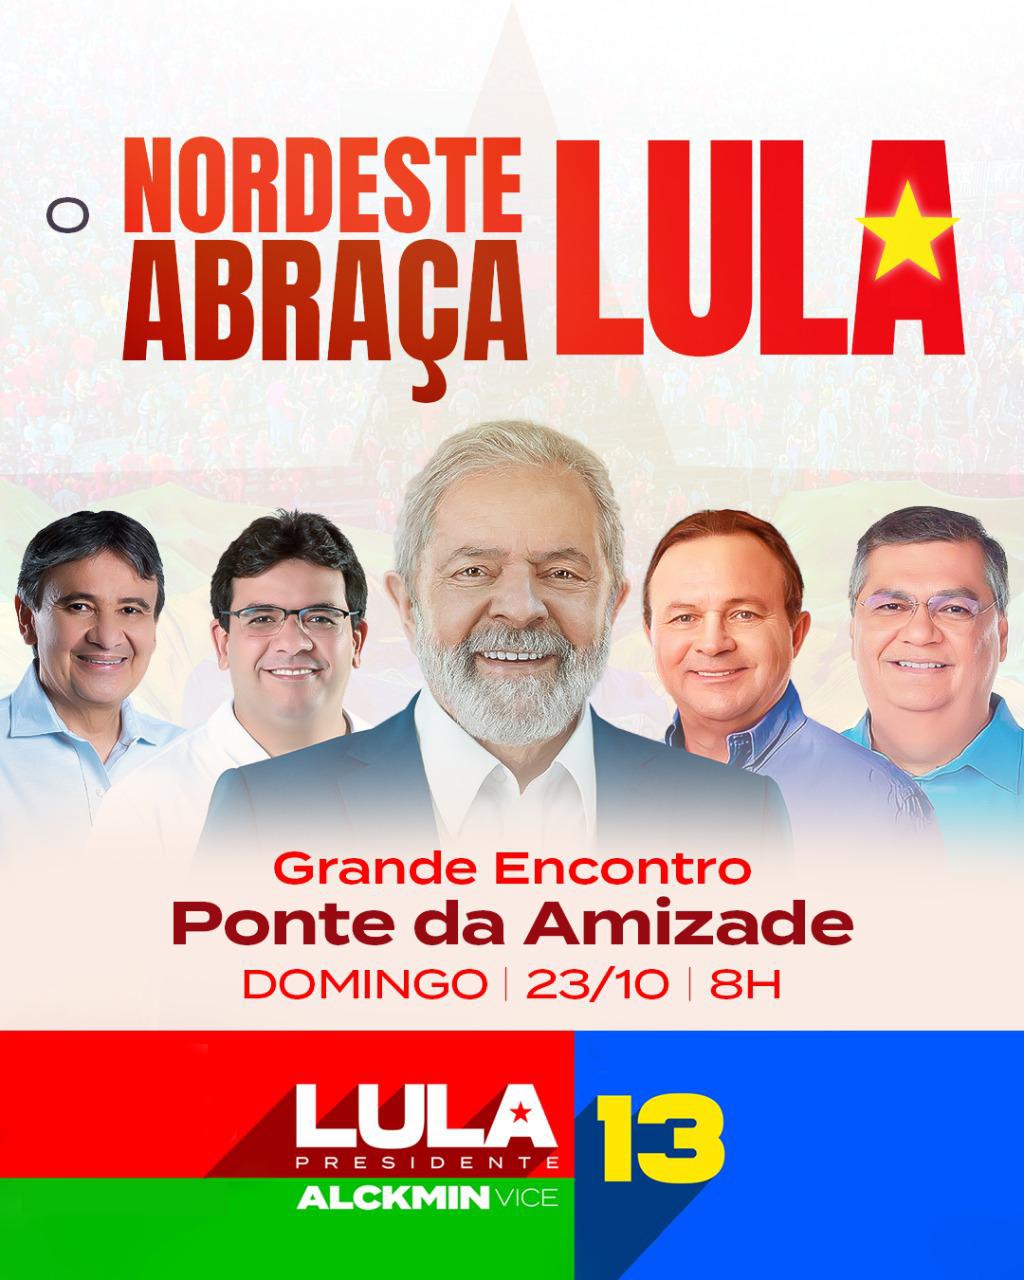 Nordeste abraça Lula